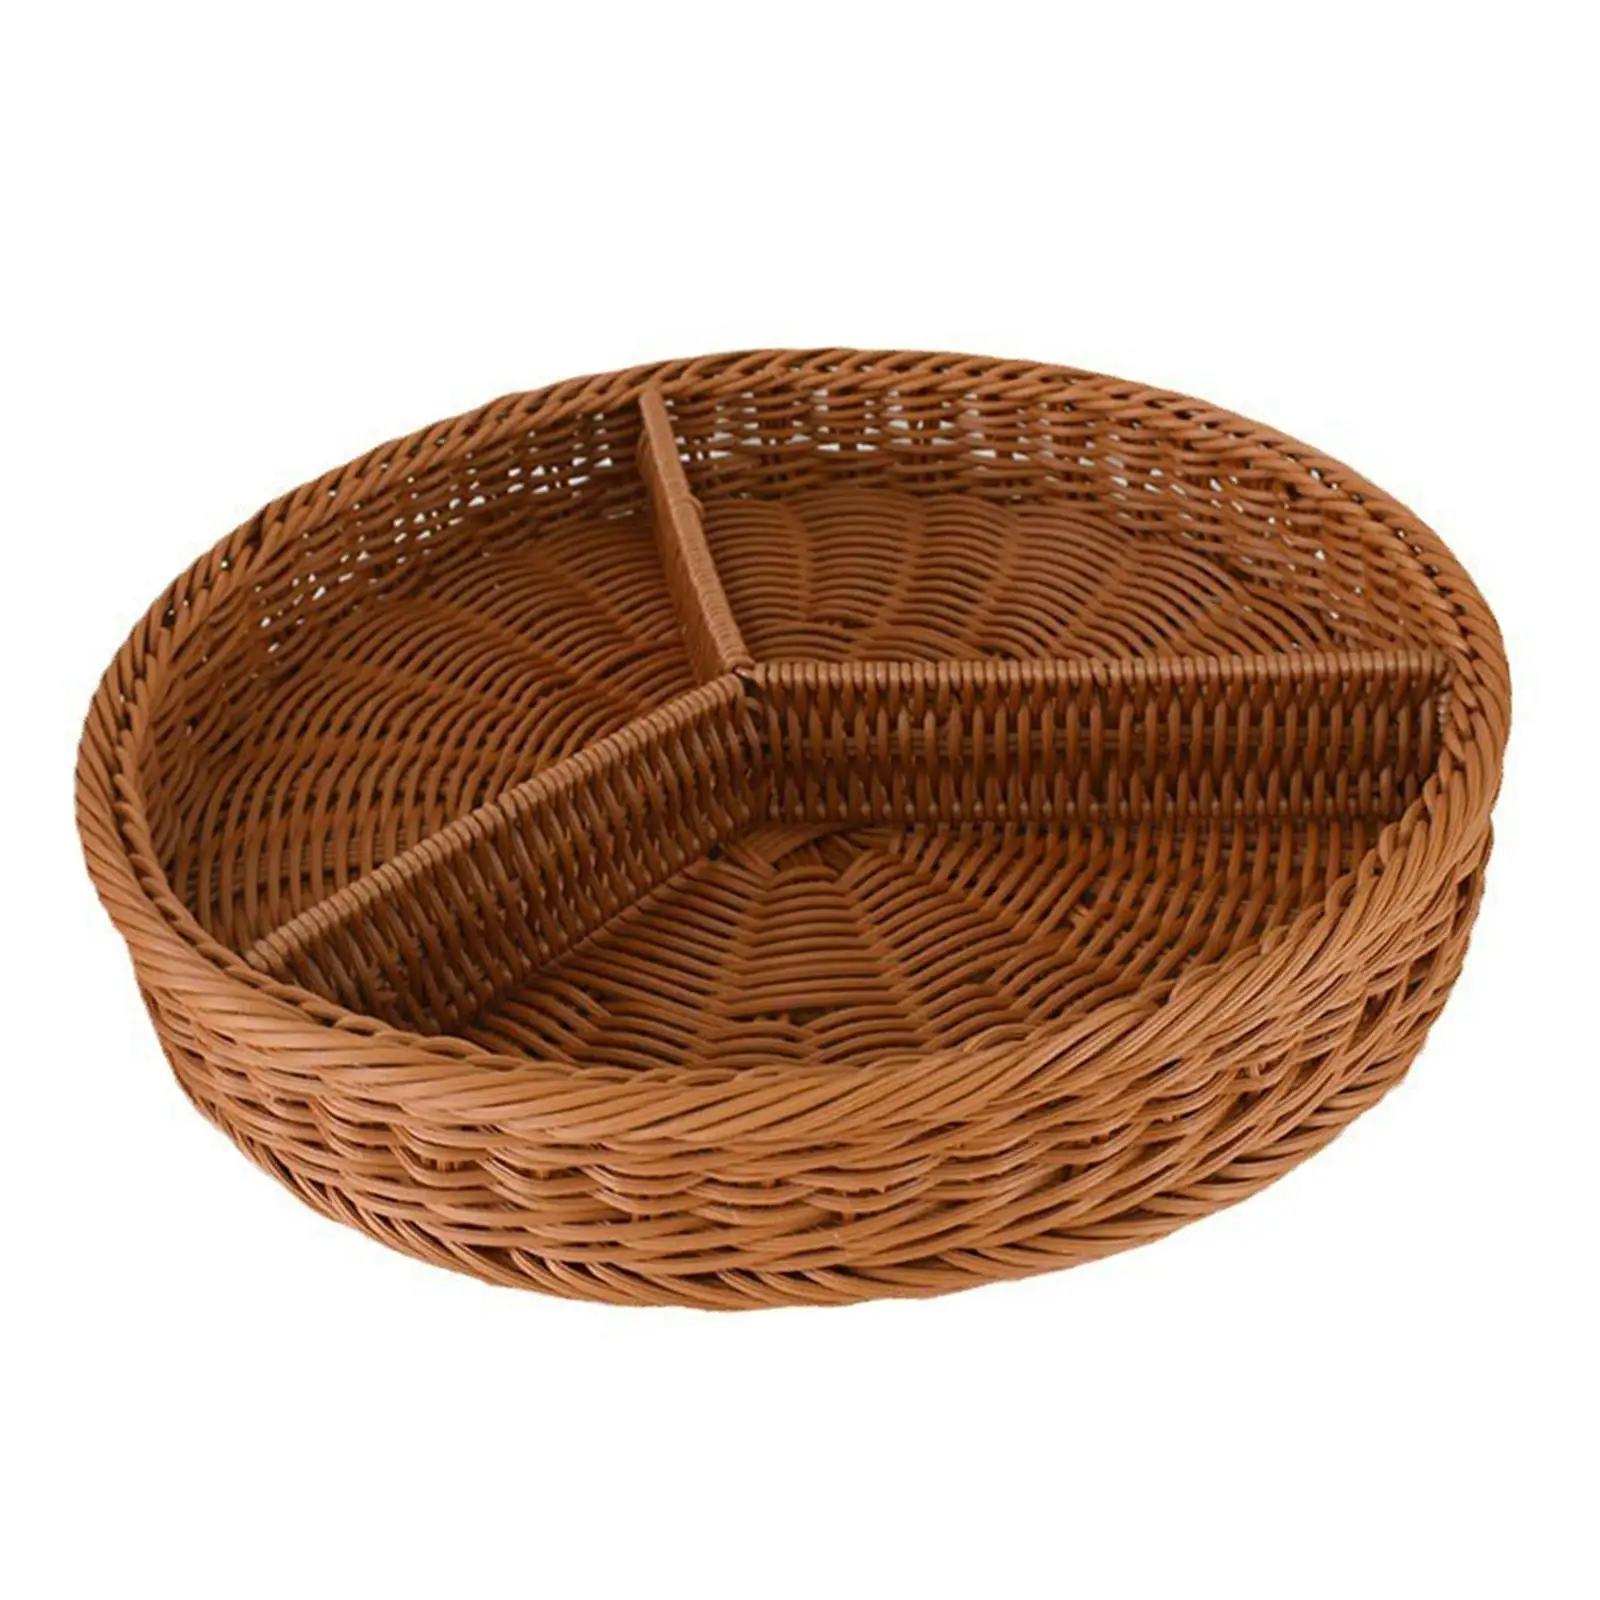 Imitation Rattan Baskets Snack Tray Handmade Wicker Storage Baskets for Kitchen Home Restaurant Dining Coffee Table Snacks